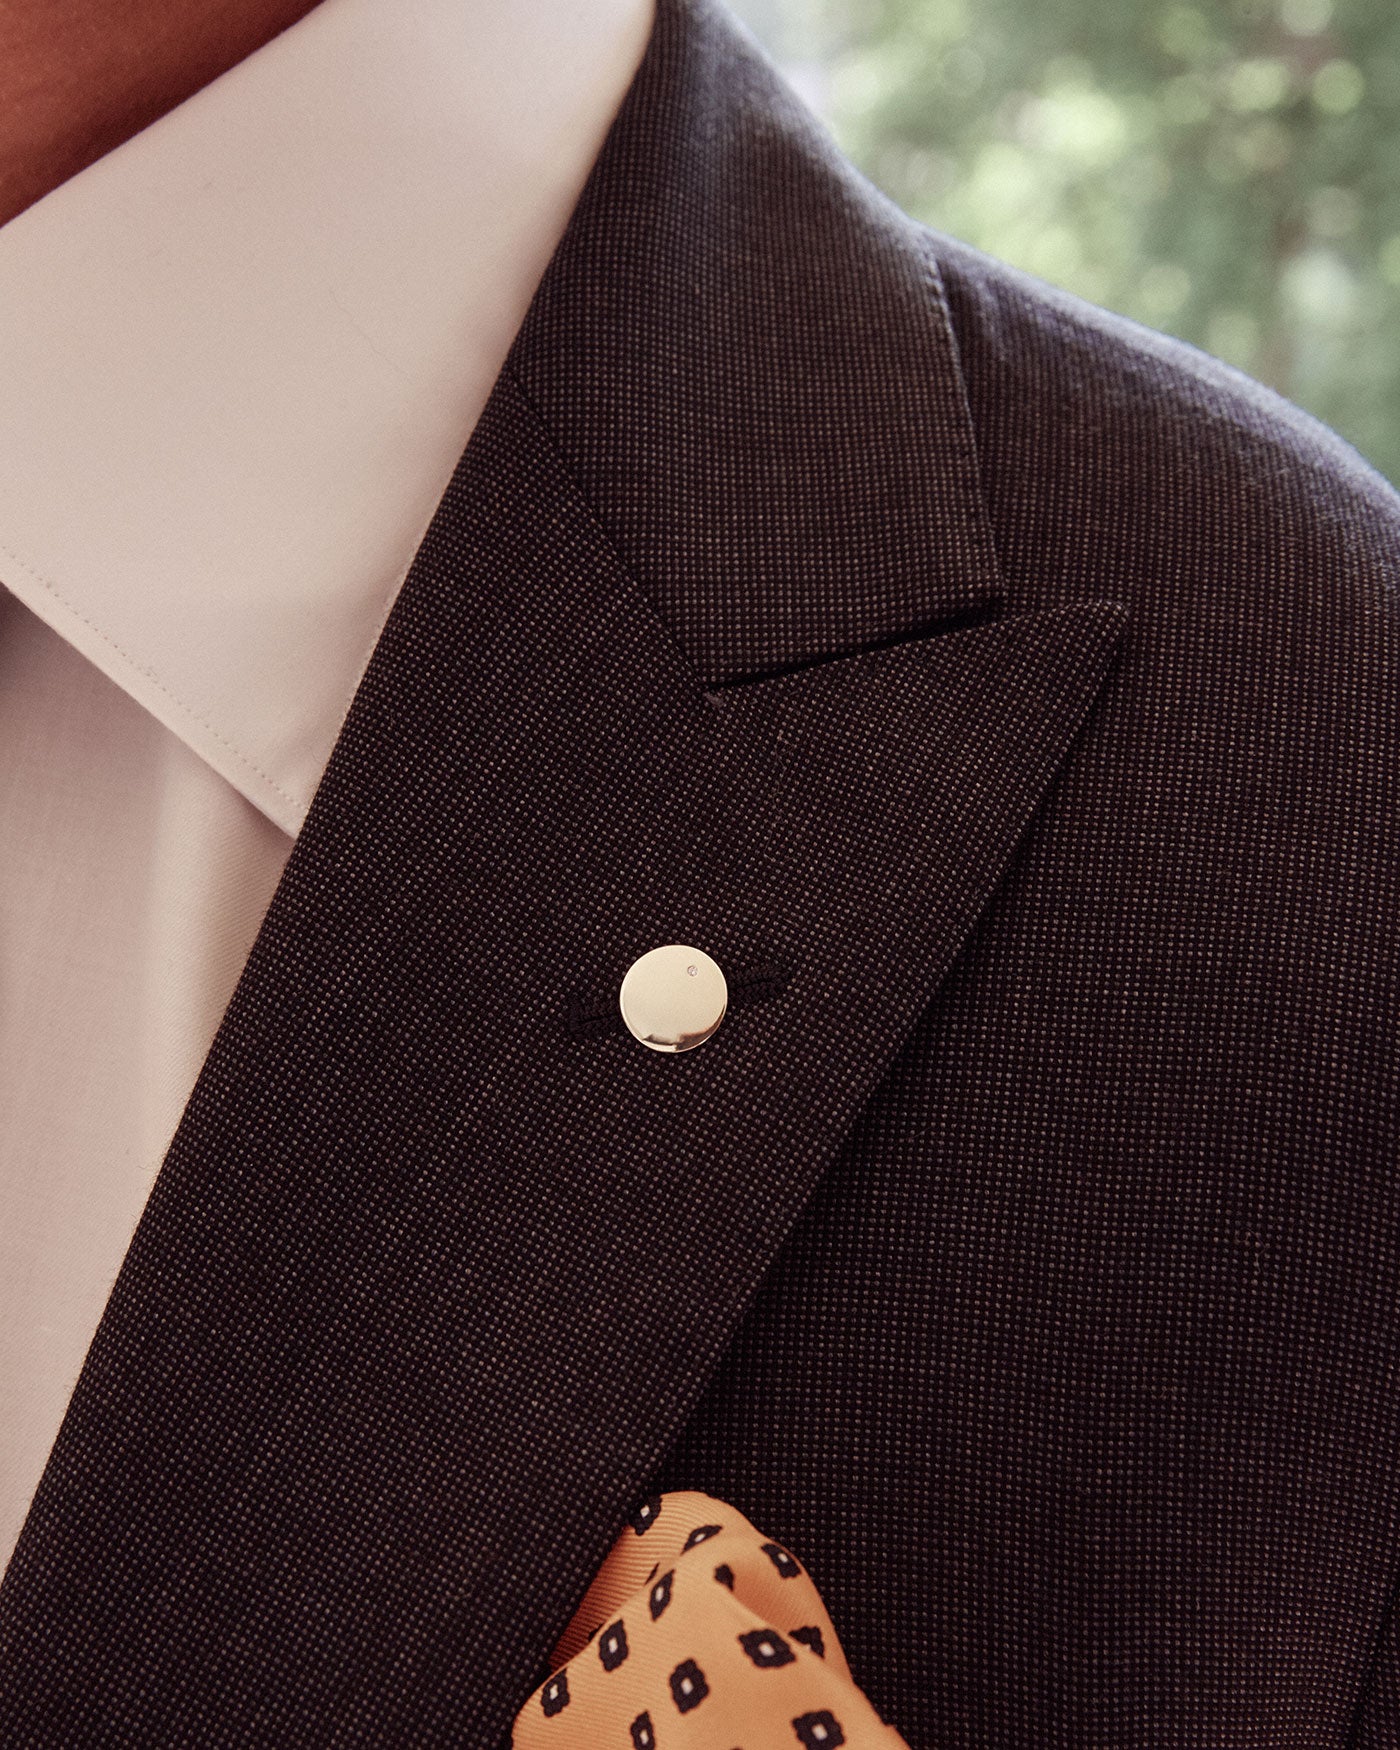 Man wearing polished gold lapel pin with white diamond